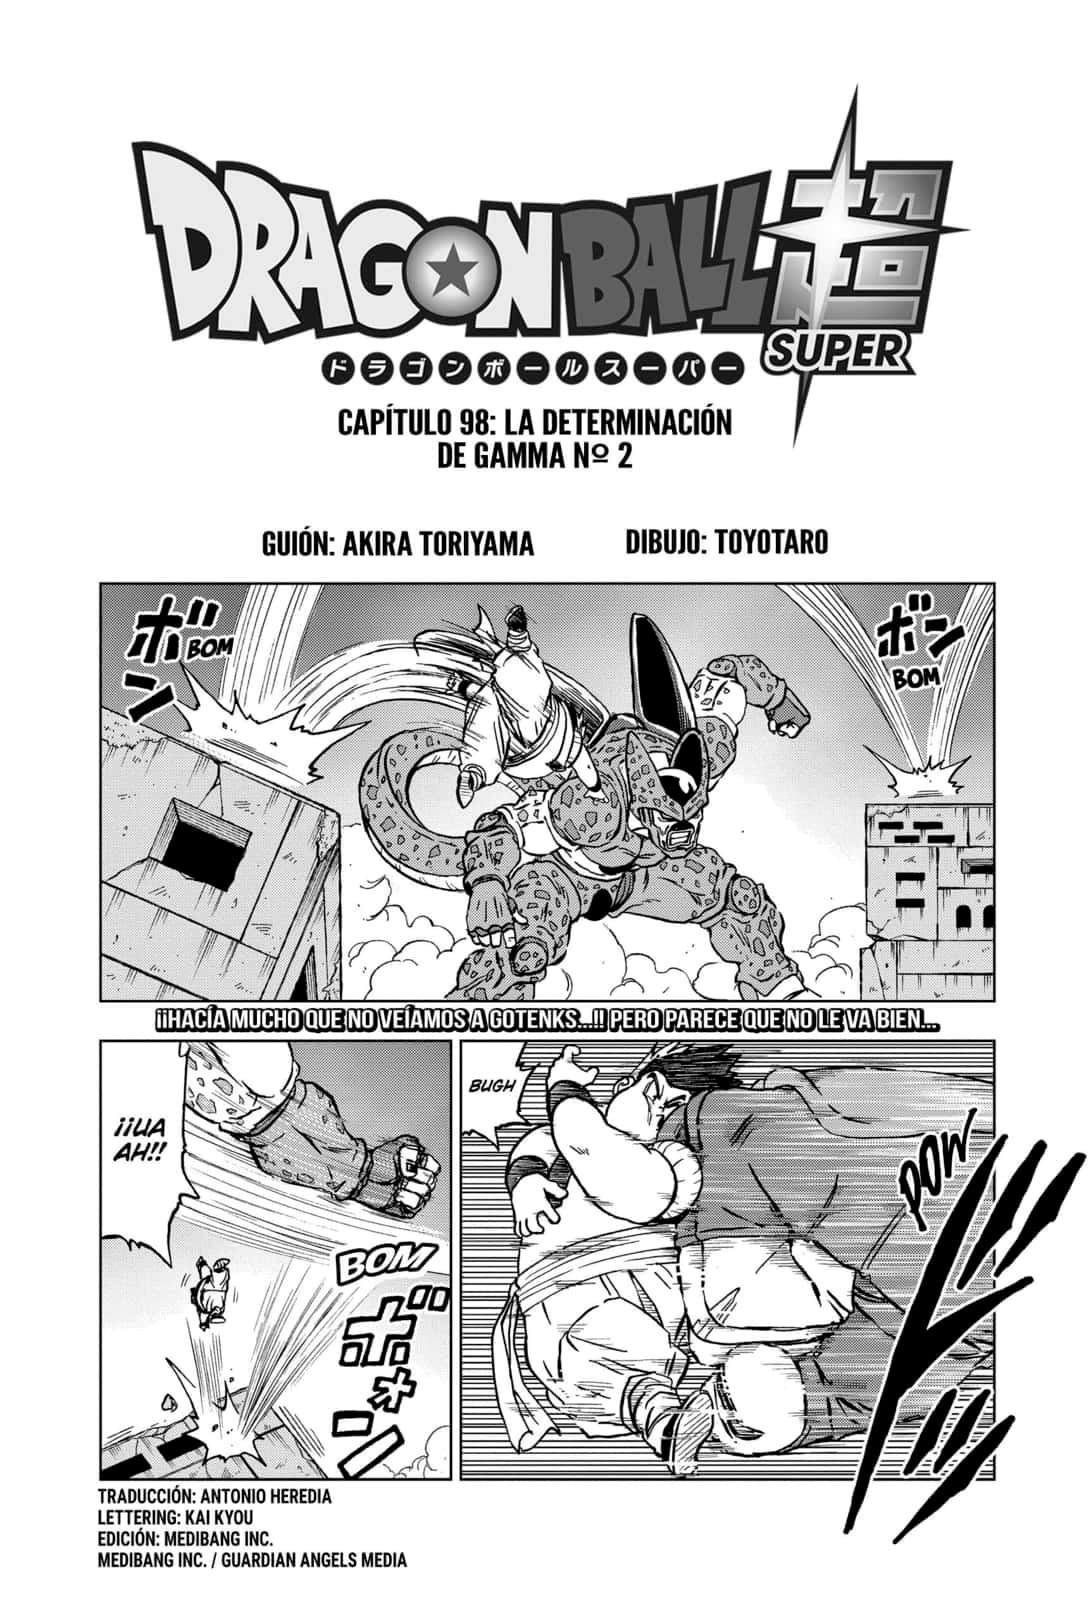 ANÁLISIS MANGA 98 y PREDICCIONES MANGA 99 - Dragon Ball Super